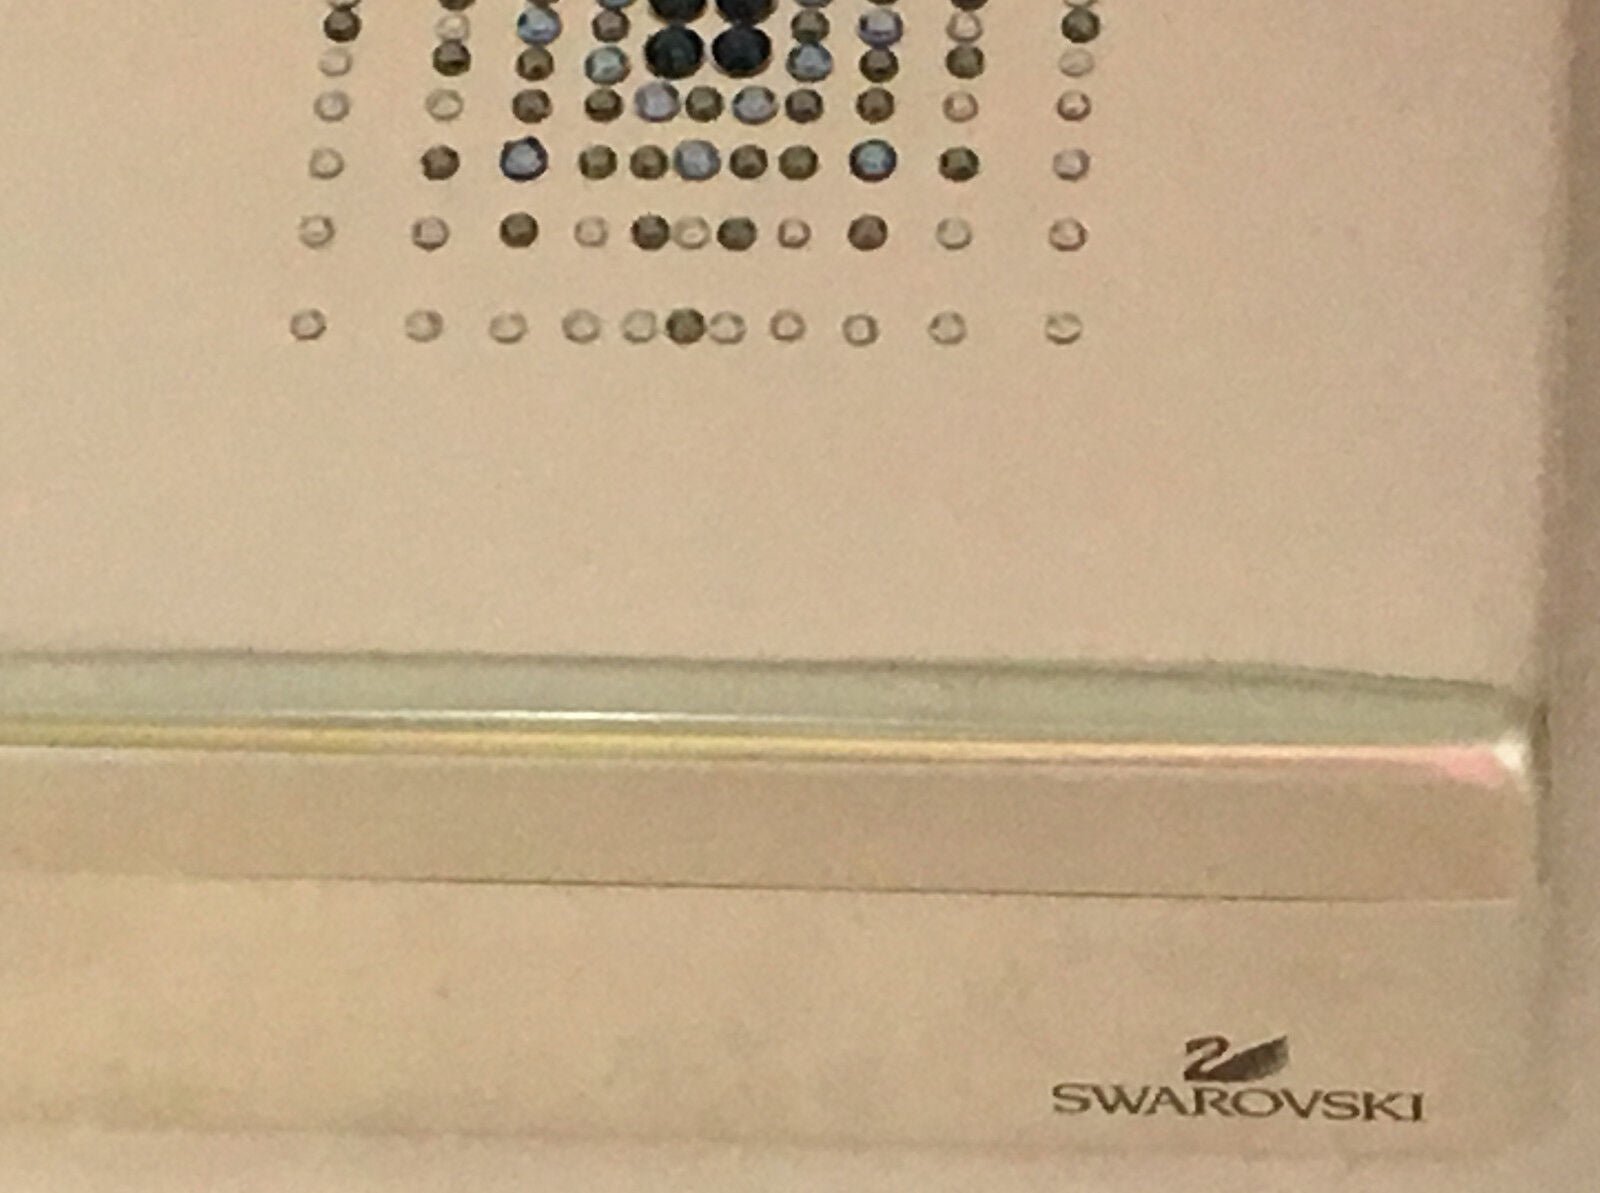 Swarovski Keepsake/Jewelry Box With Blue and Clear Crystals, Felt Lined